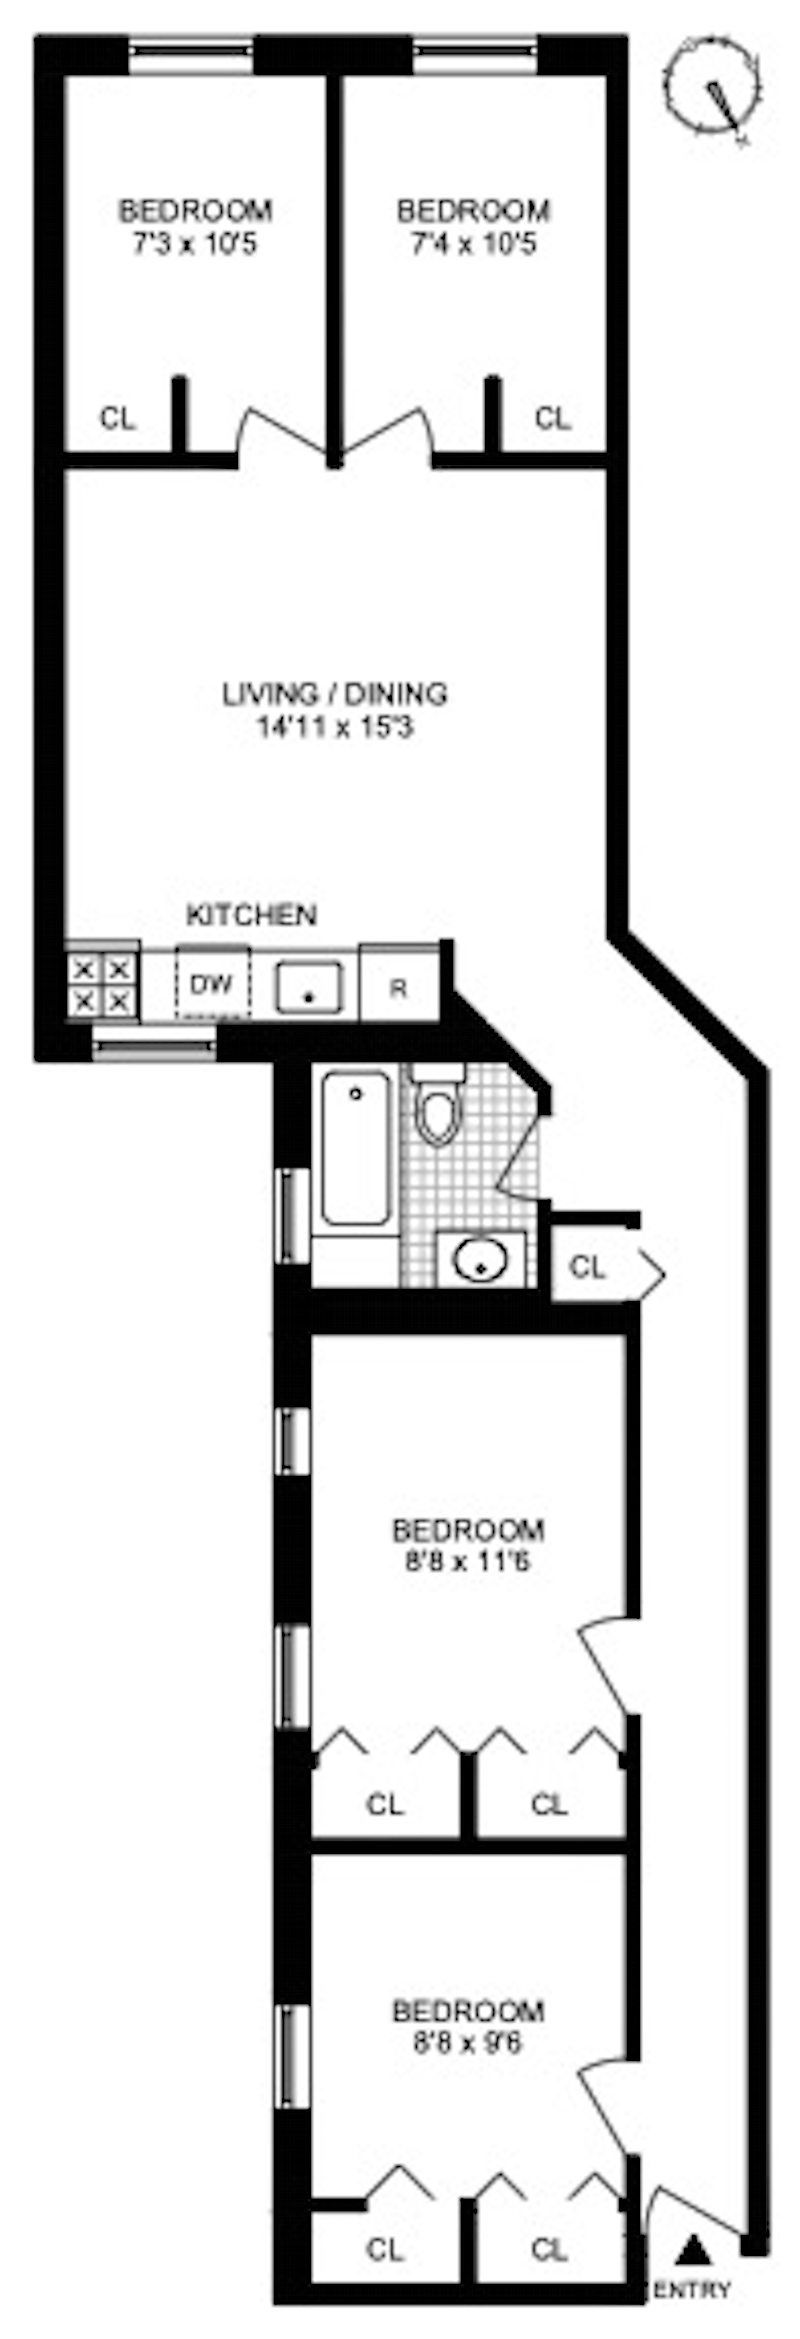 Floorplan for 205 West 103rd Street, 5E